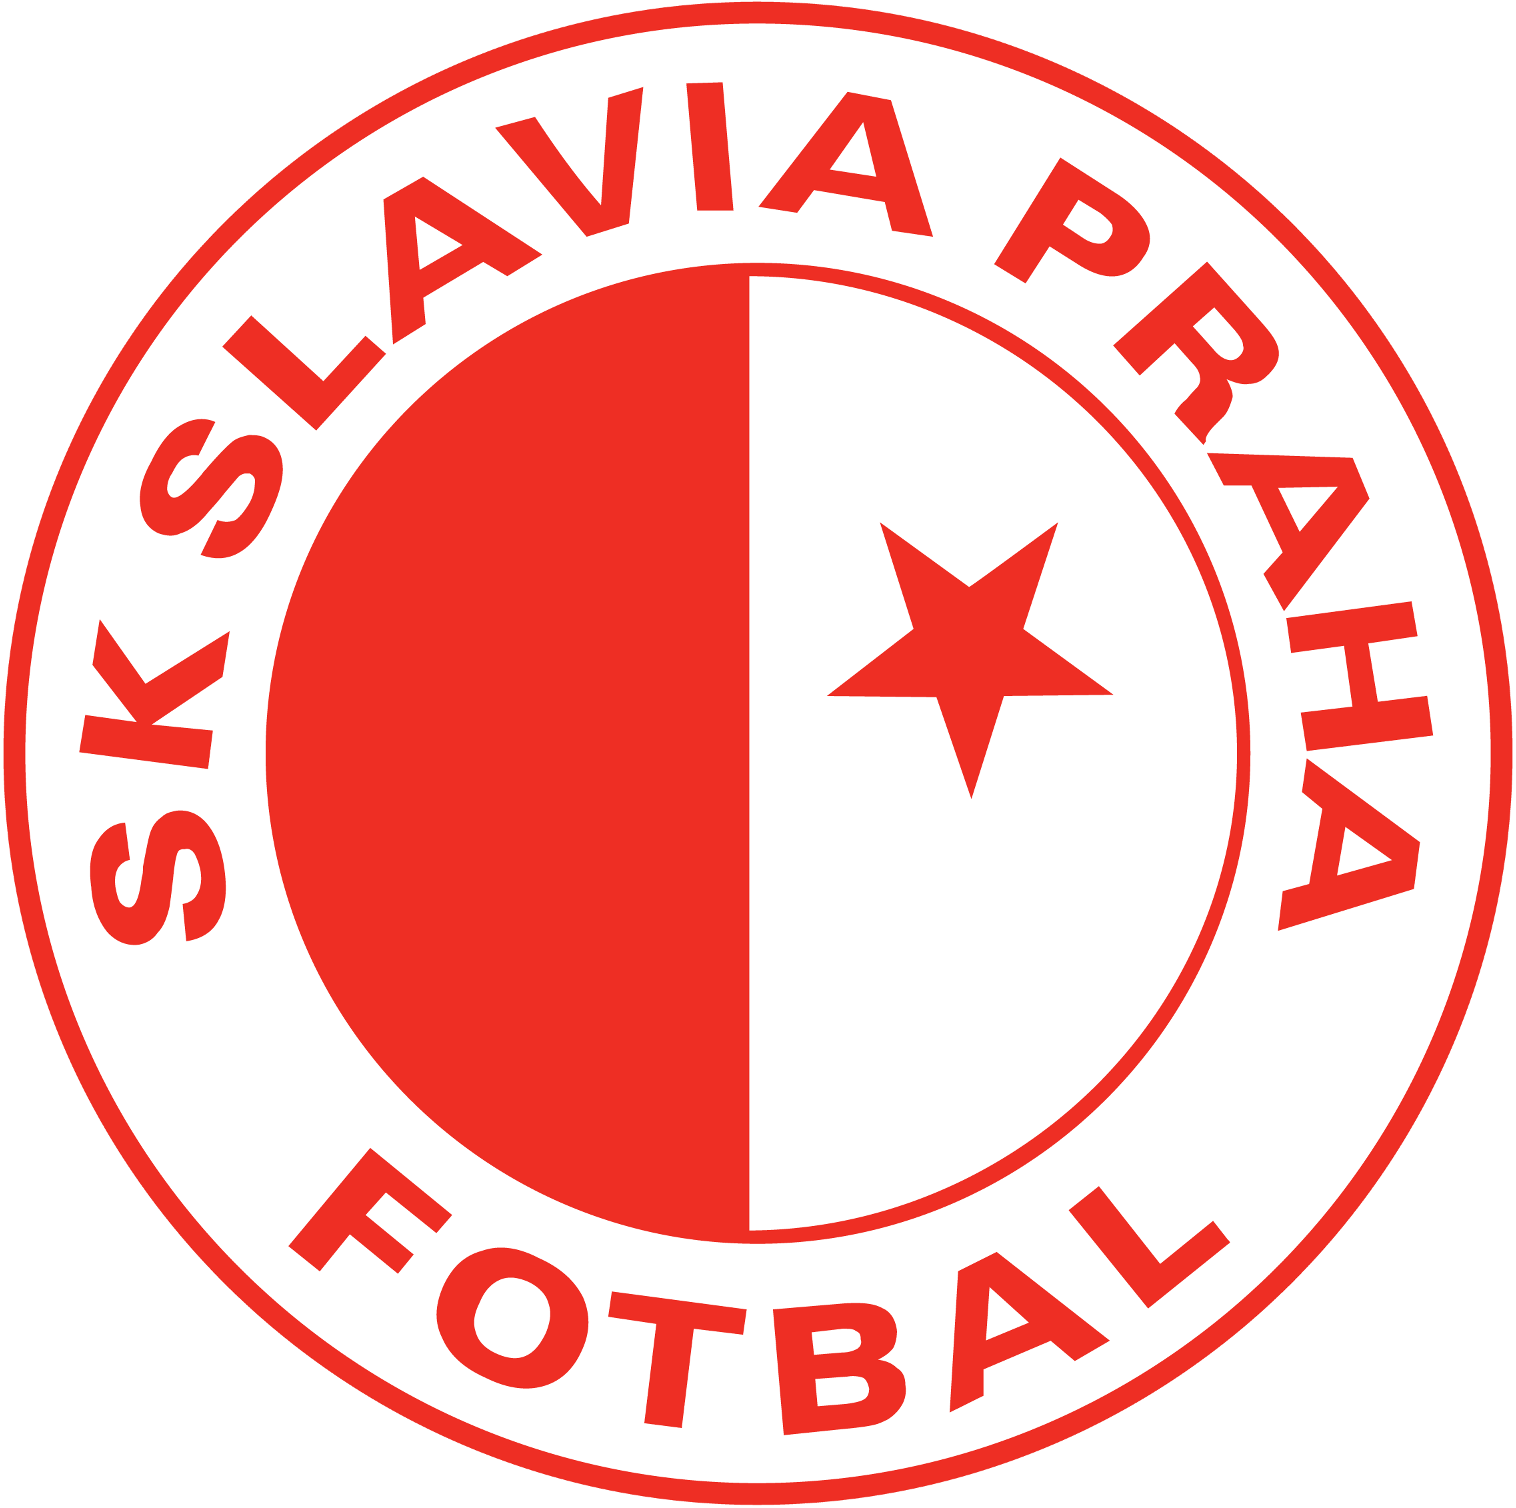 SK Slavia Praha - nohejbal